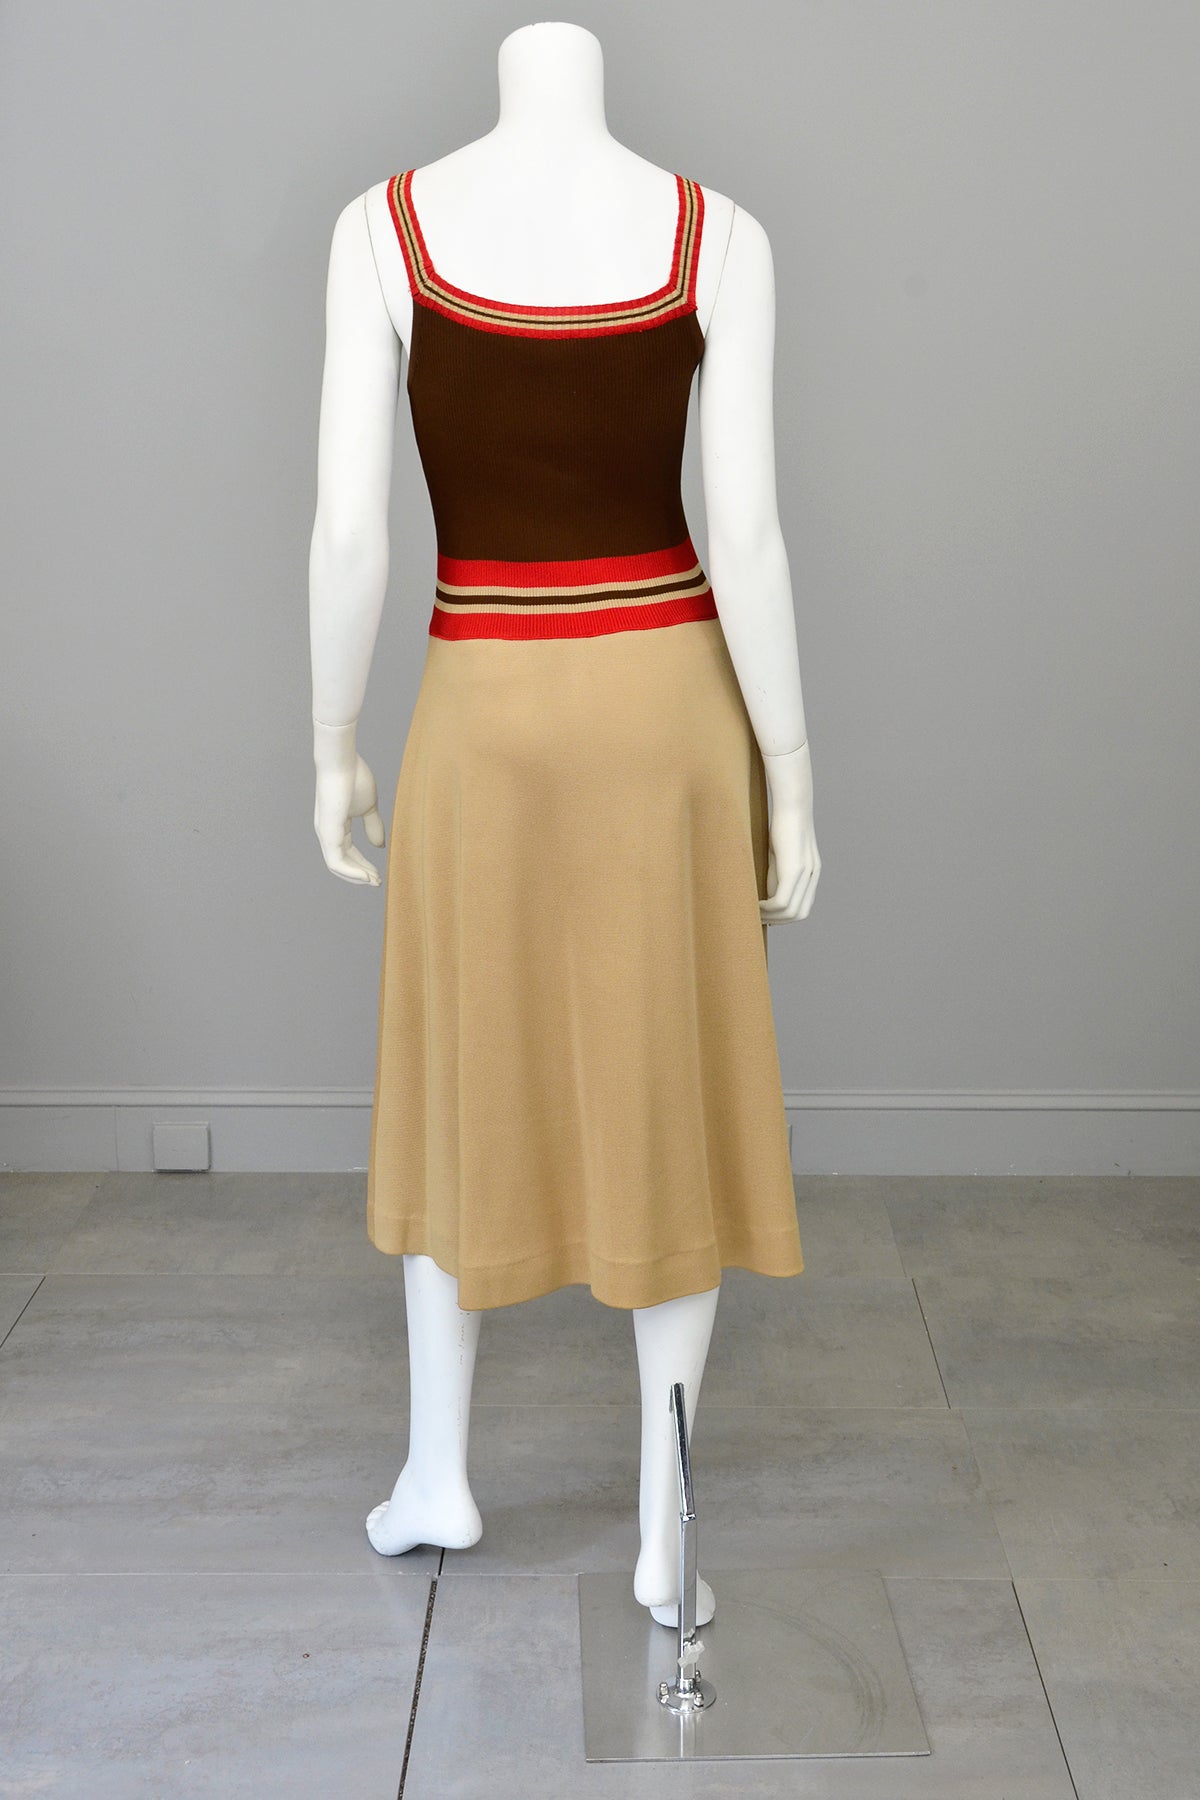 1970s Mod Retro Color Block Knit Dress by Crissa